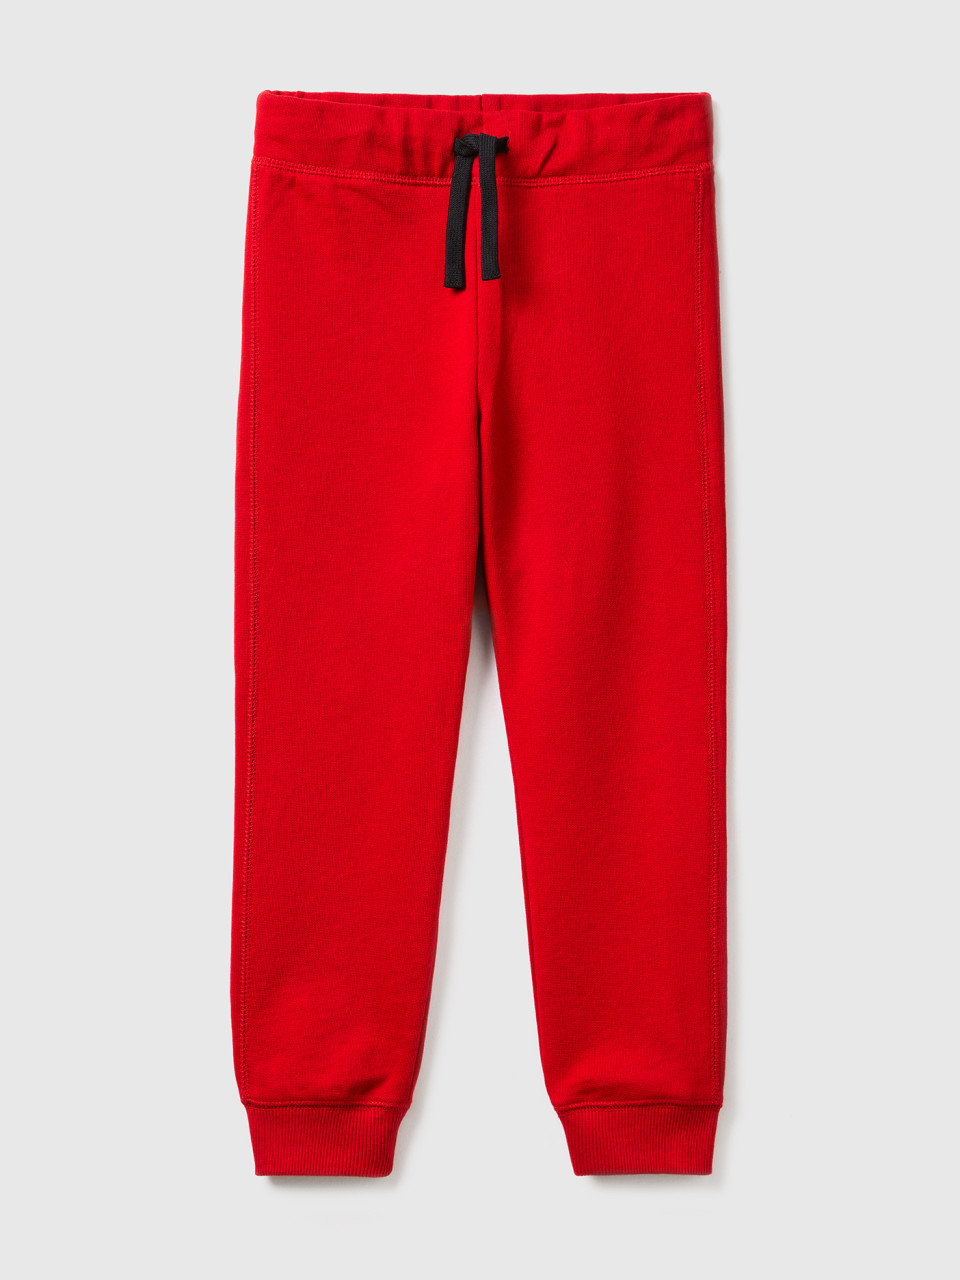 Benetton, 100% Cotton Sweatpants, Red, Kids